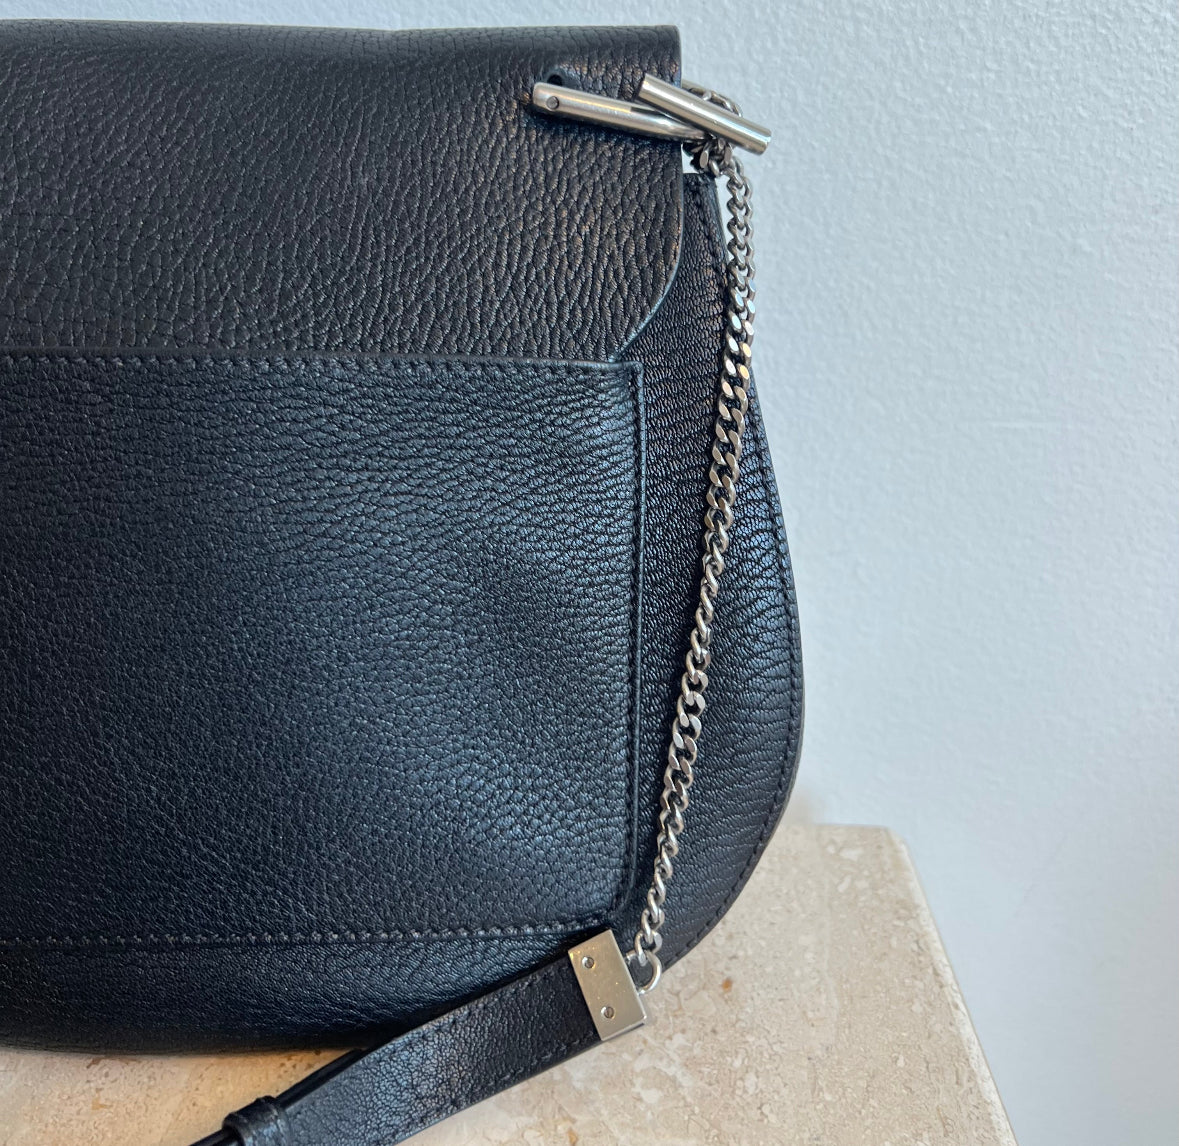 Pre-Owned CHLOE Black Leather Drew Crossbody Bag